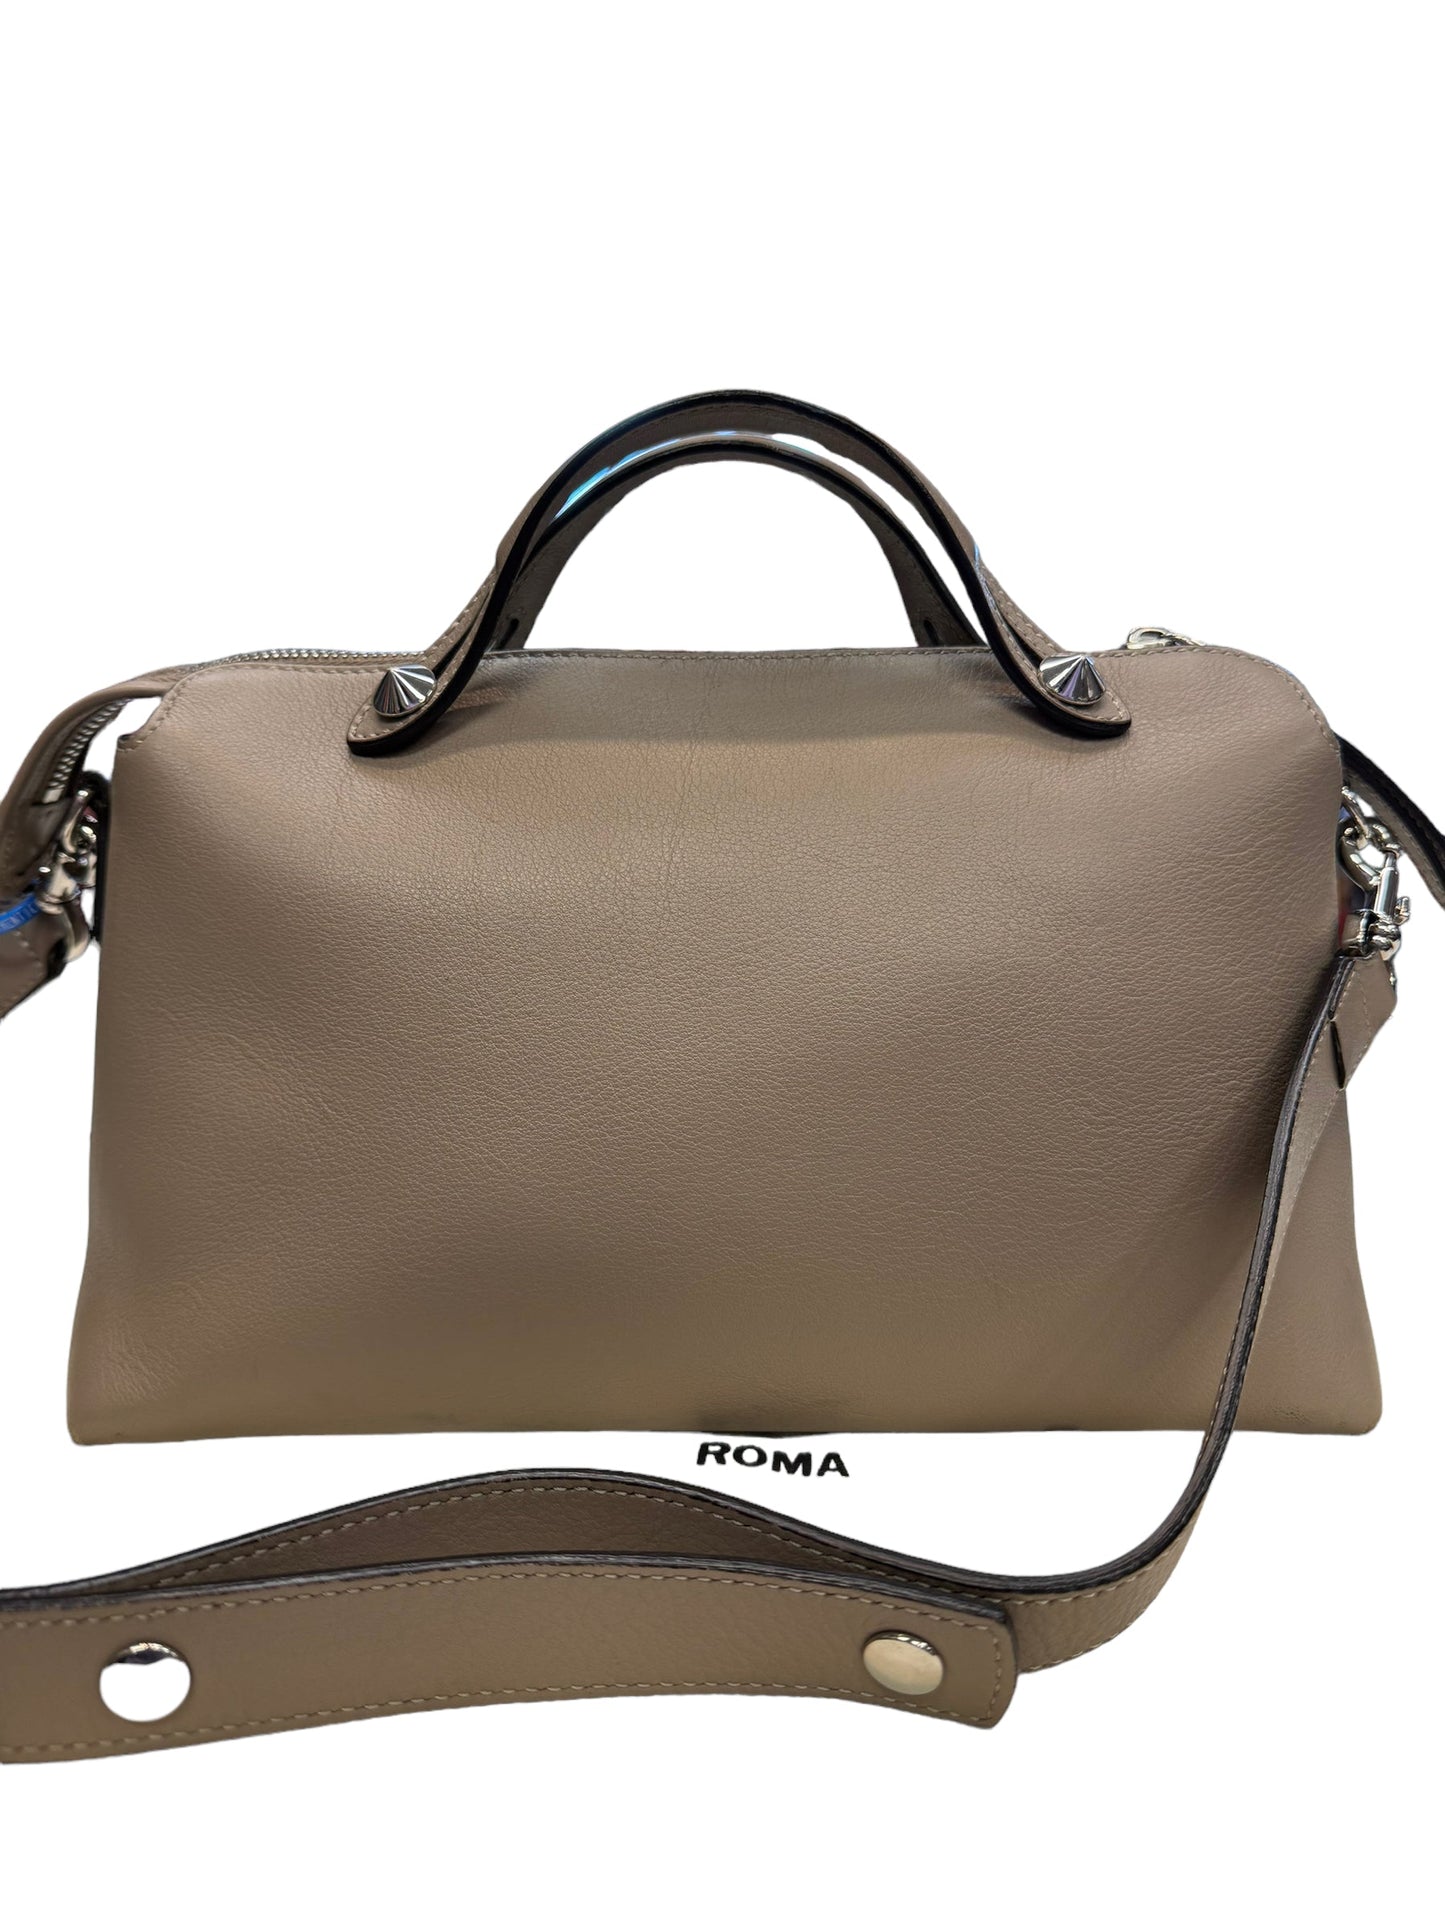 Handbag Luxury Designer By Fendi  Size: Medium